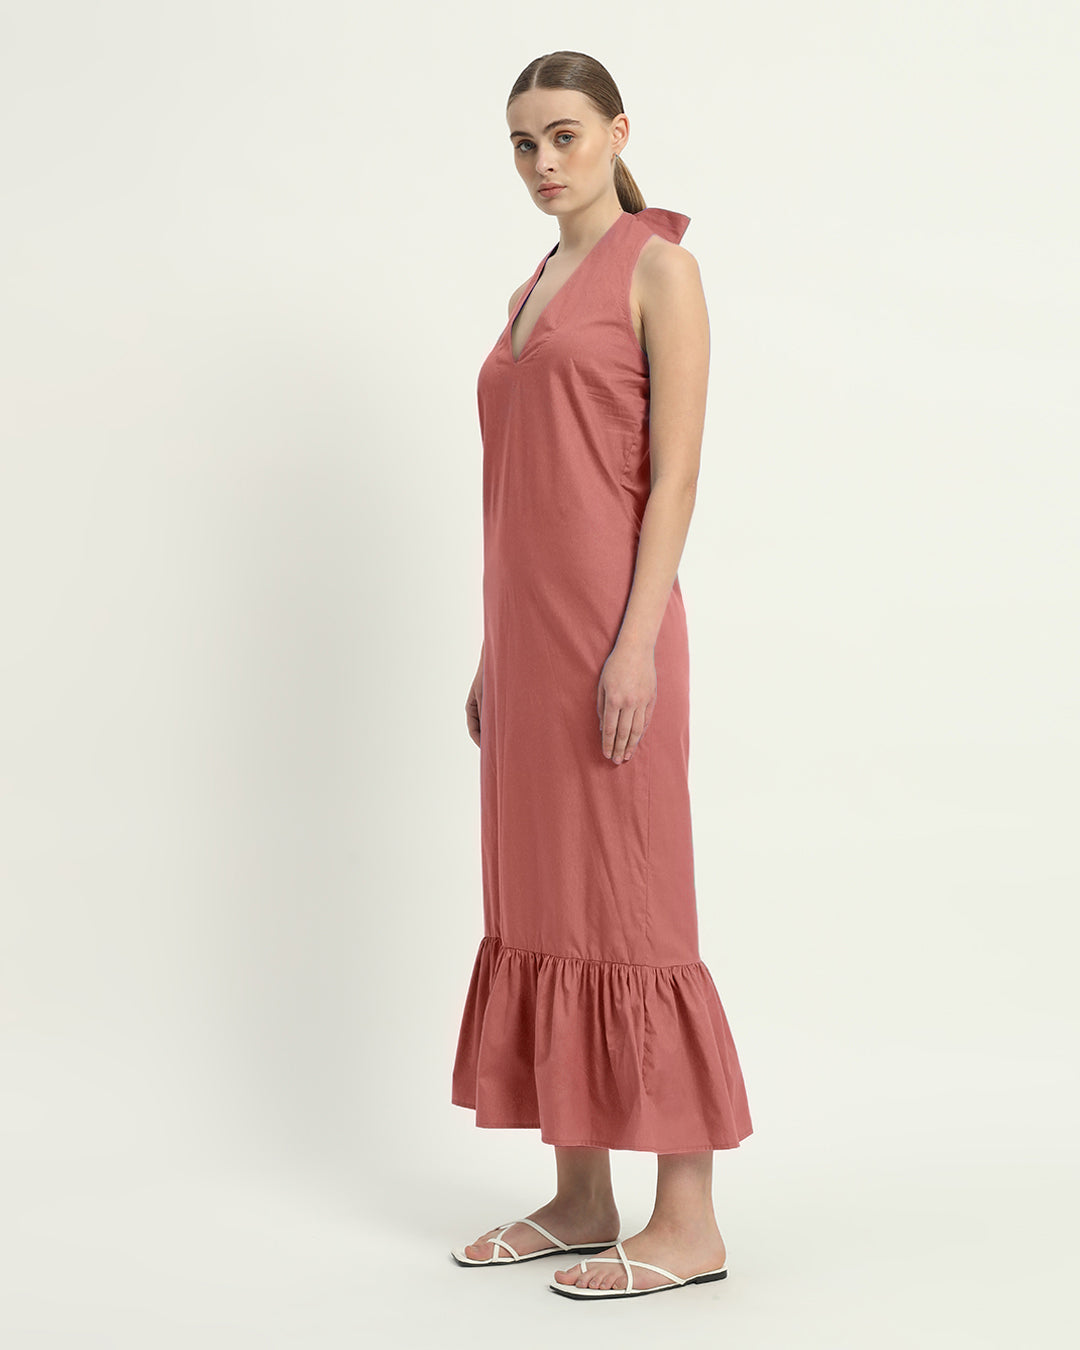 The Wellsville  Ivory Pink Cotton Dress